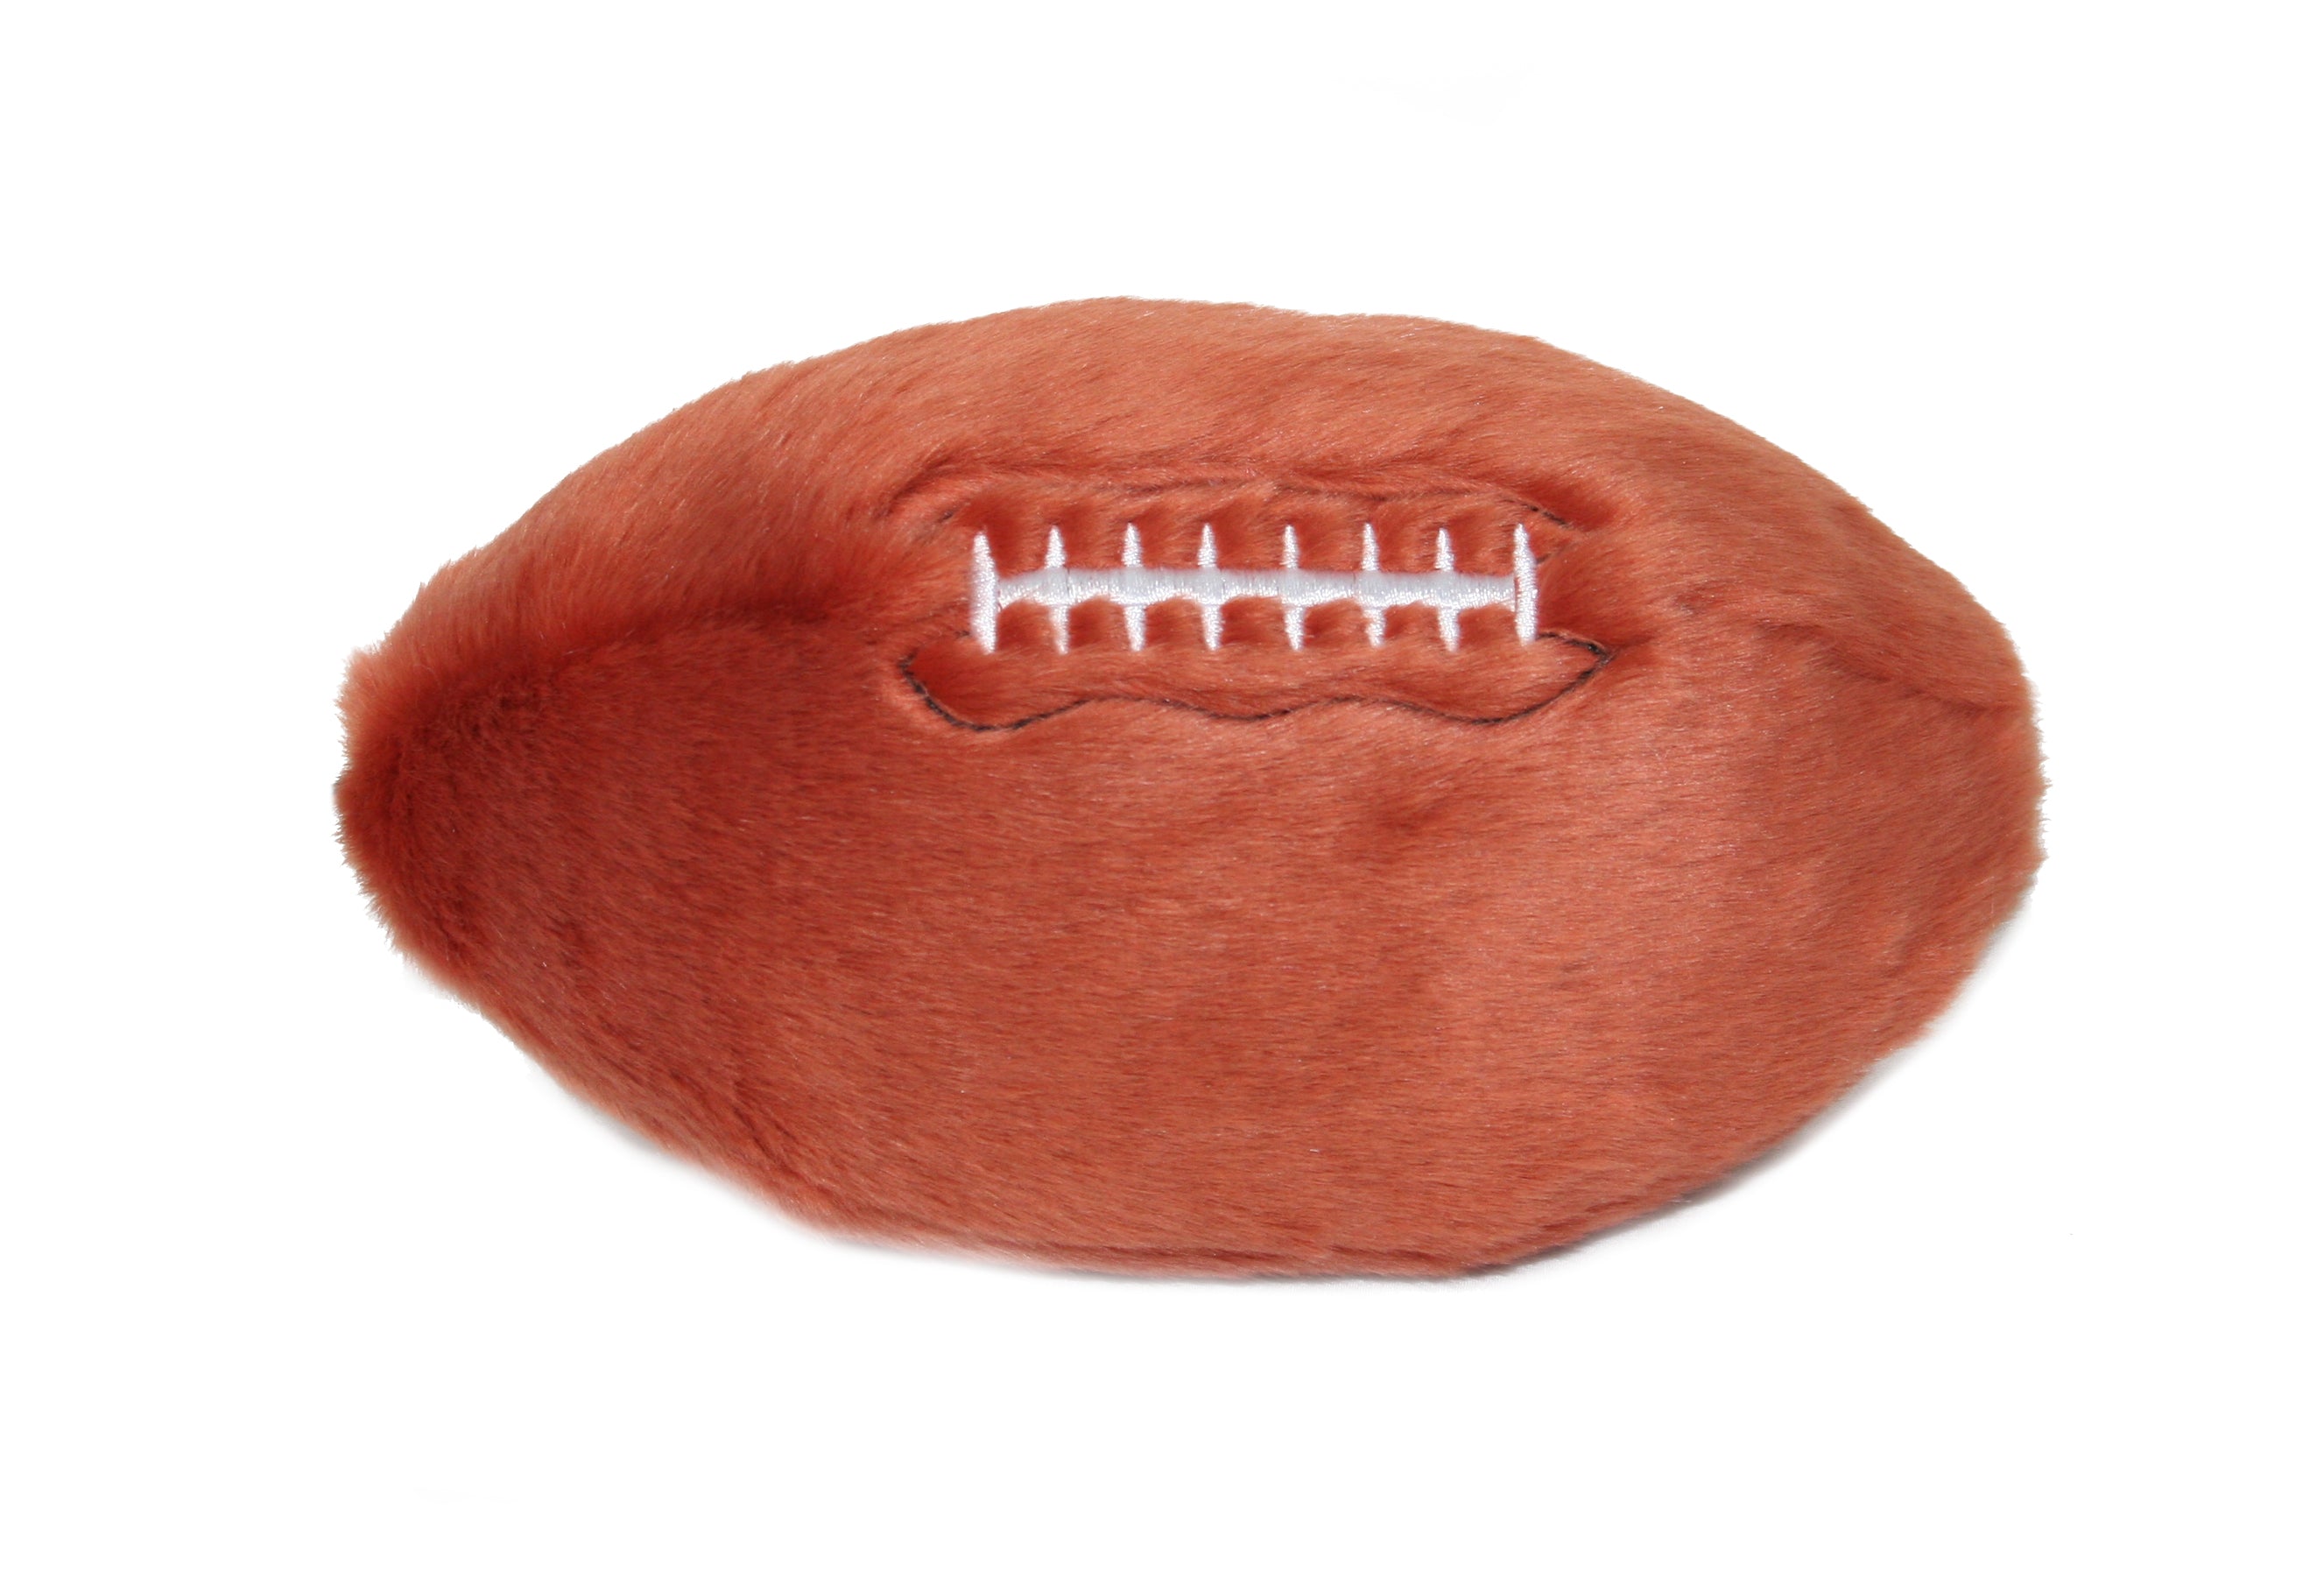 football dog toy